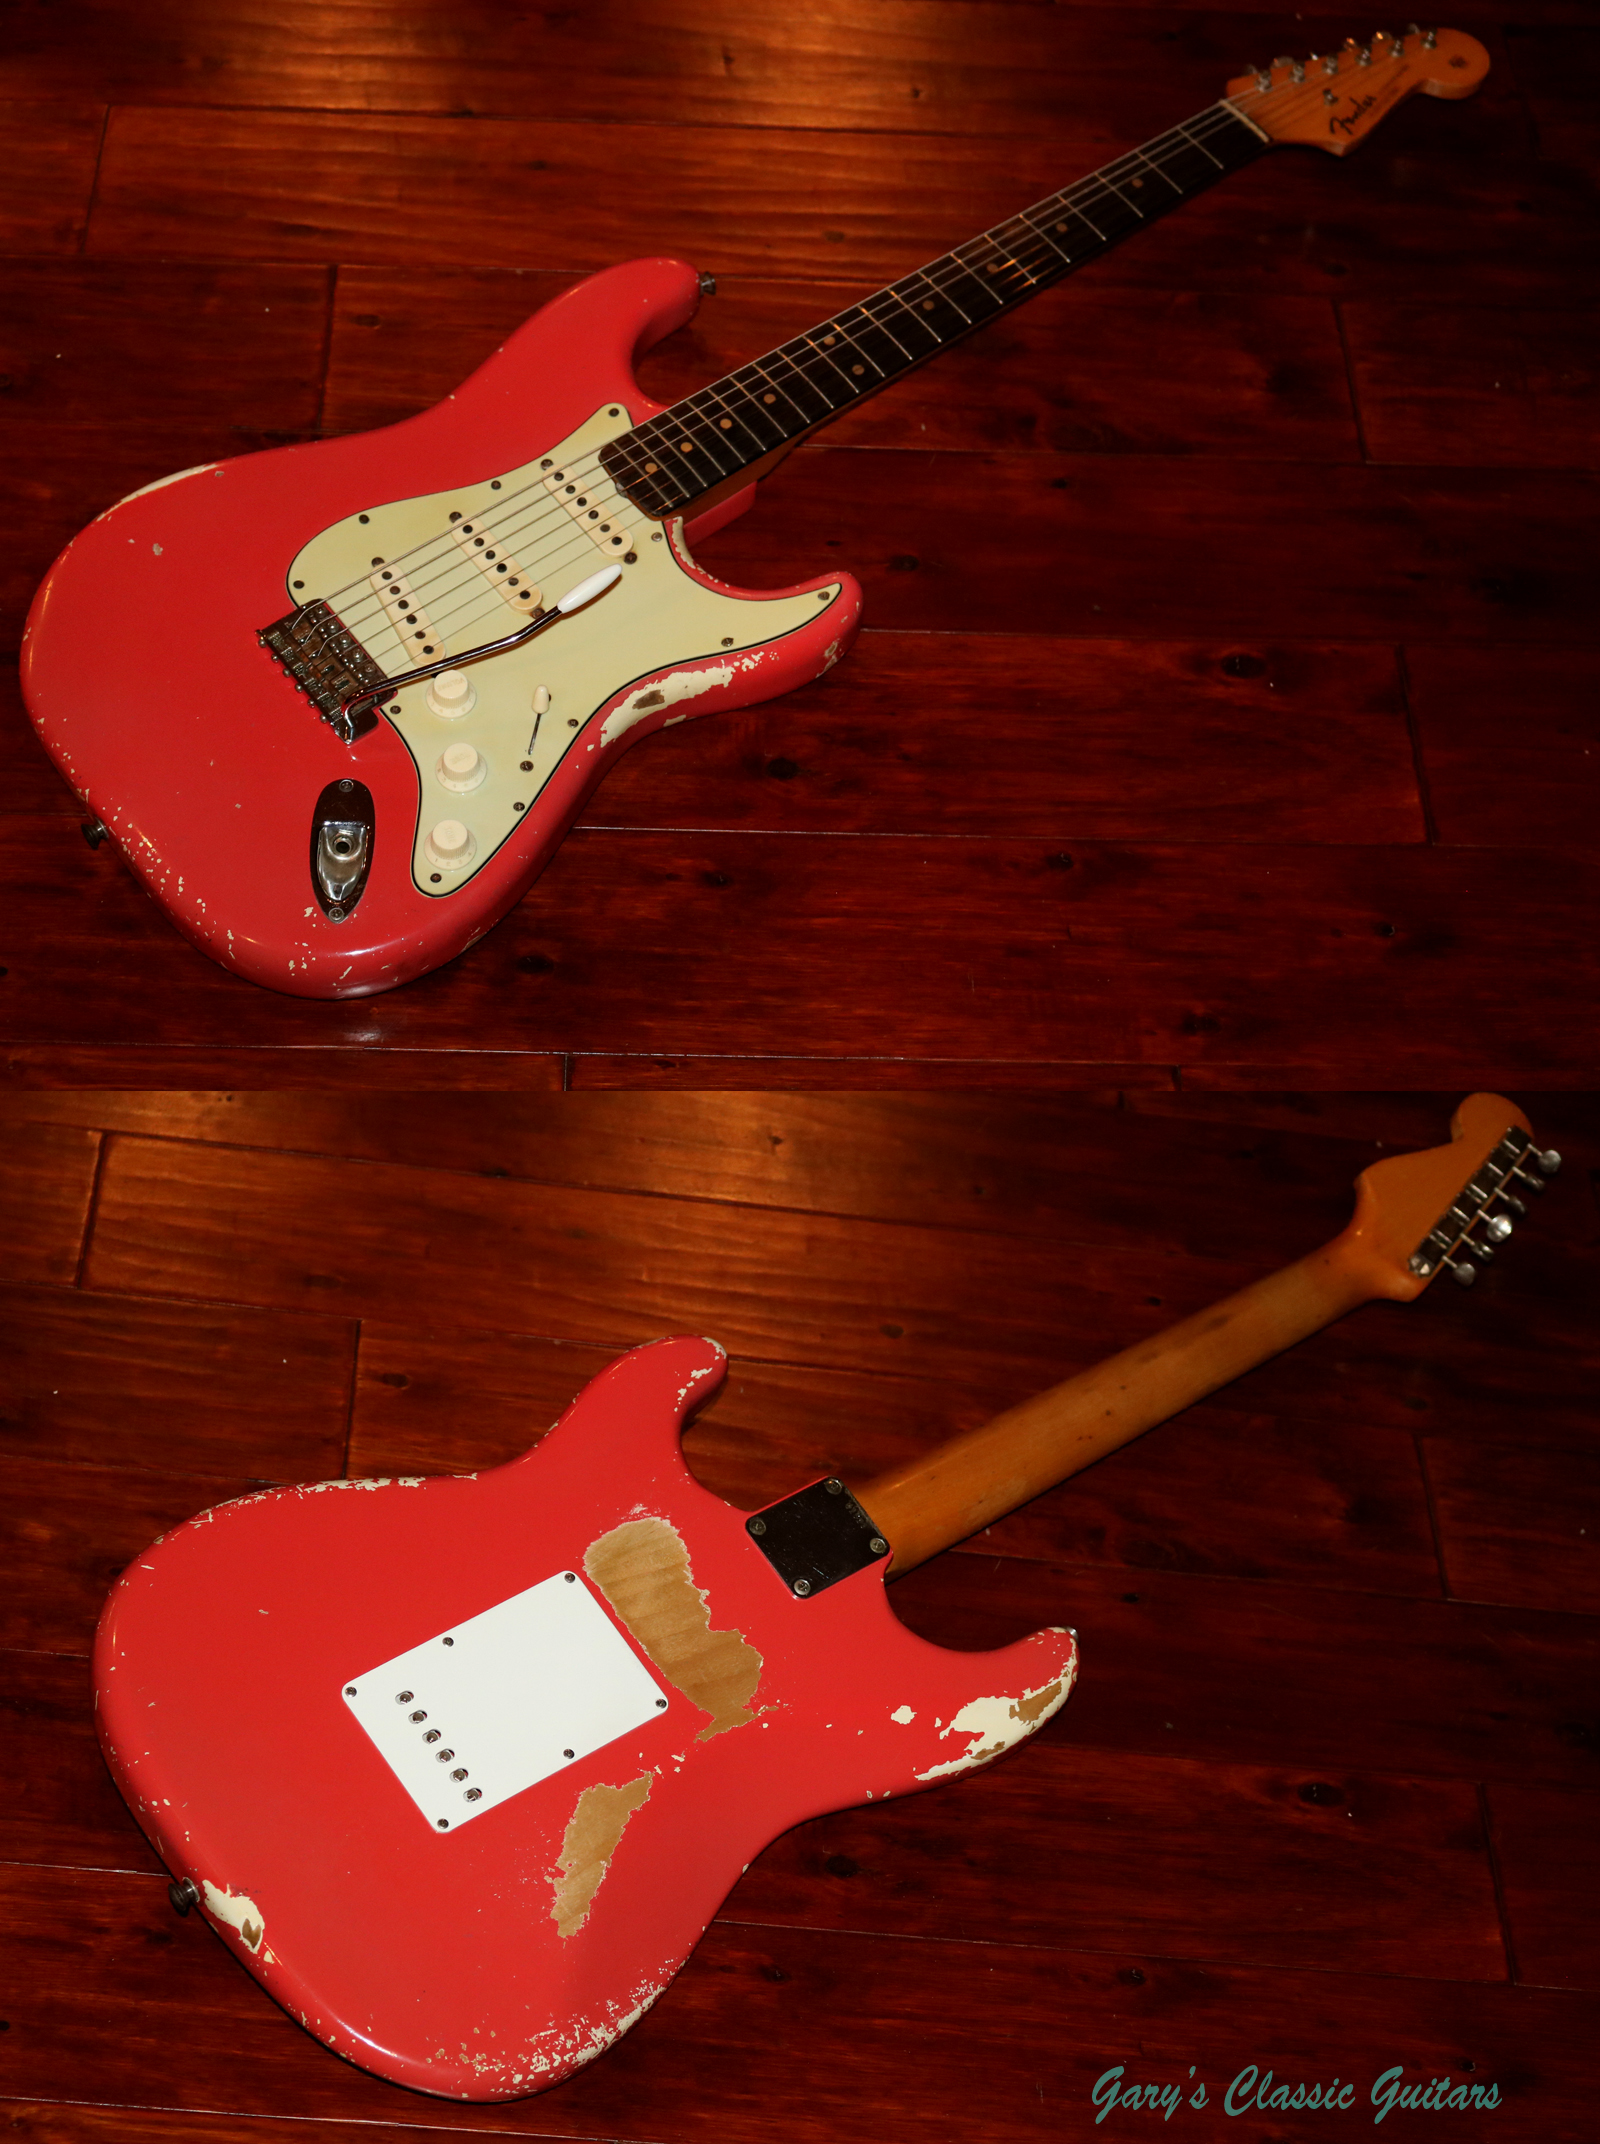 Fender Stratocaster Fee0853 1963 Fiesta Red Guitar For Sale Garys Classic Guitars